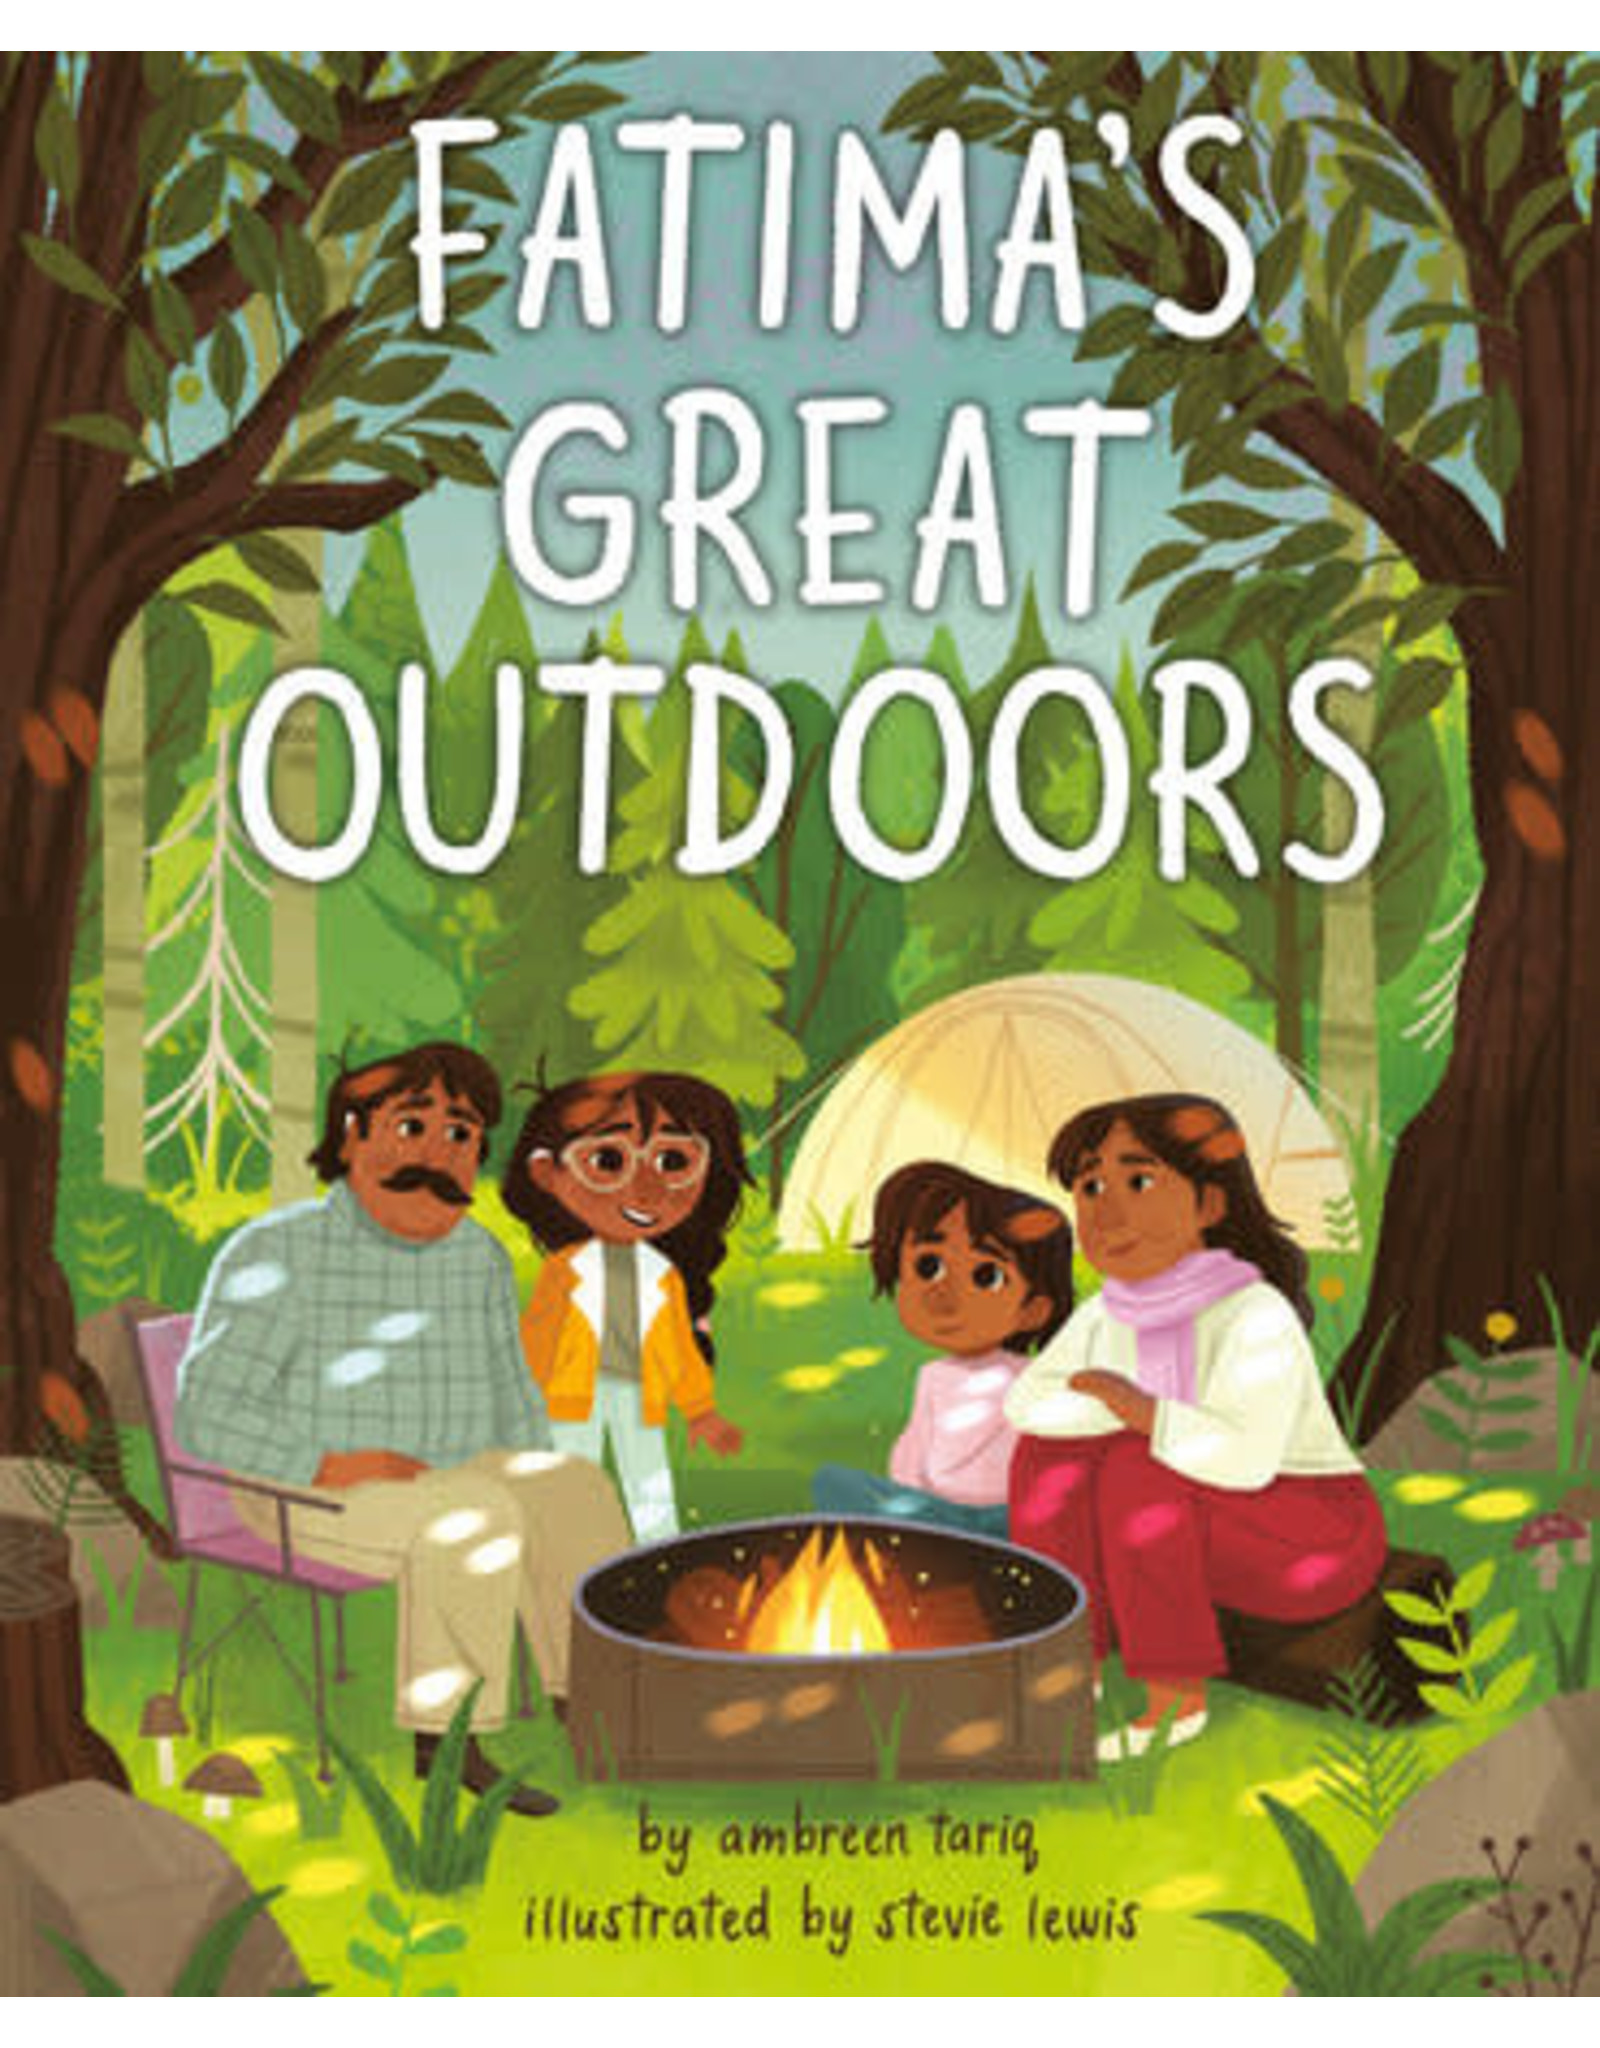 Fatima's Great Outdoors